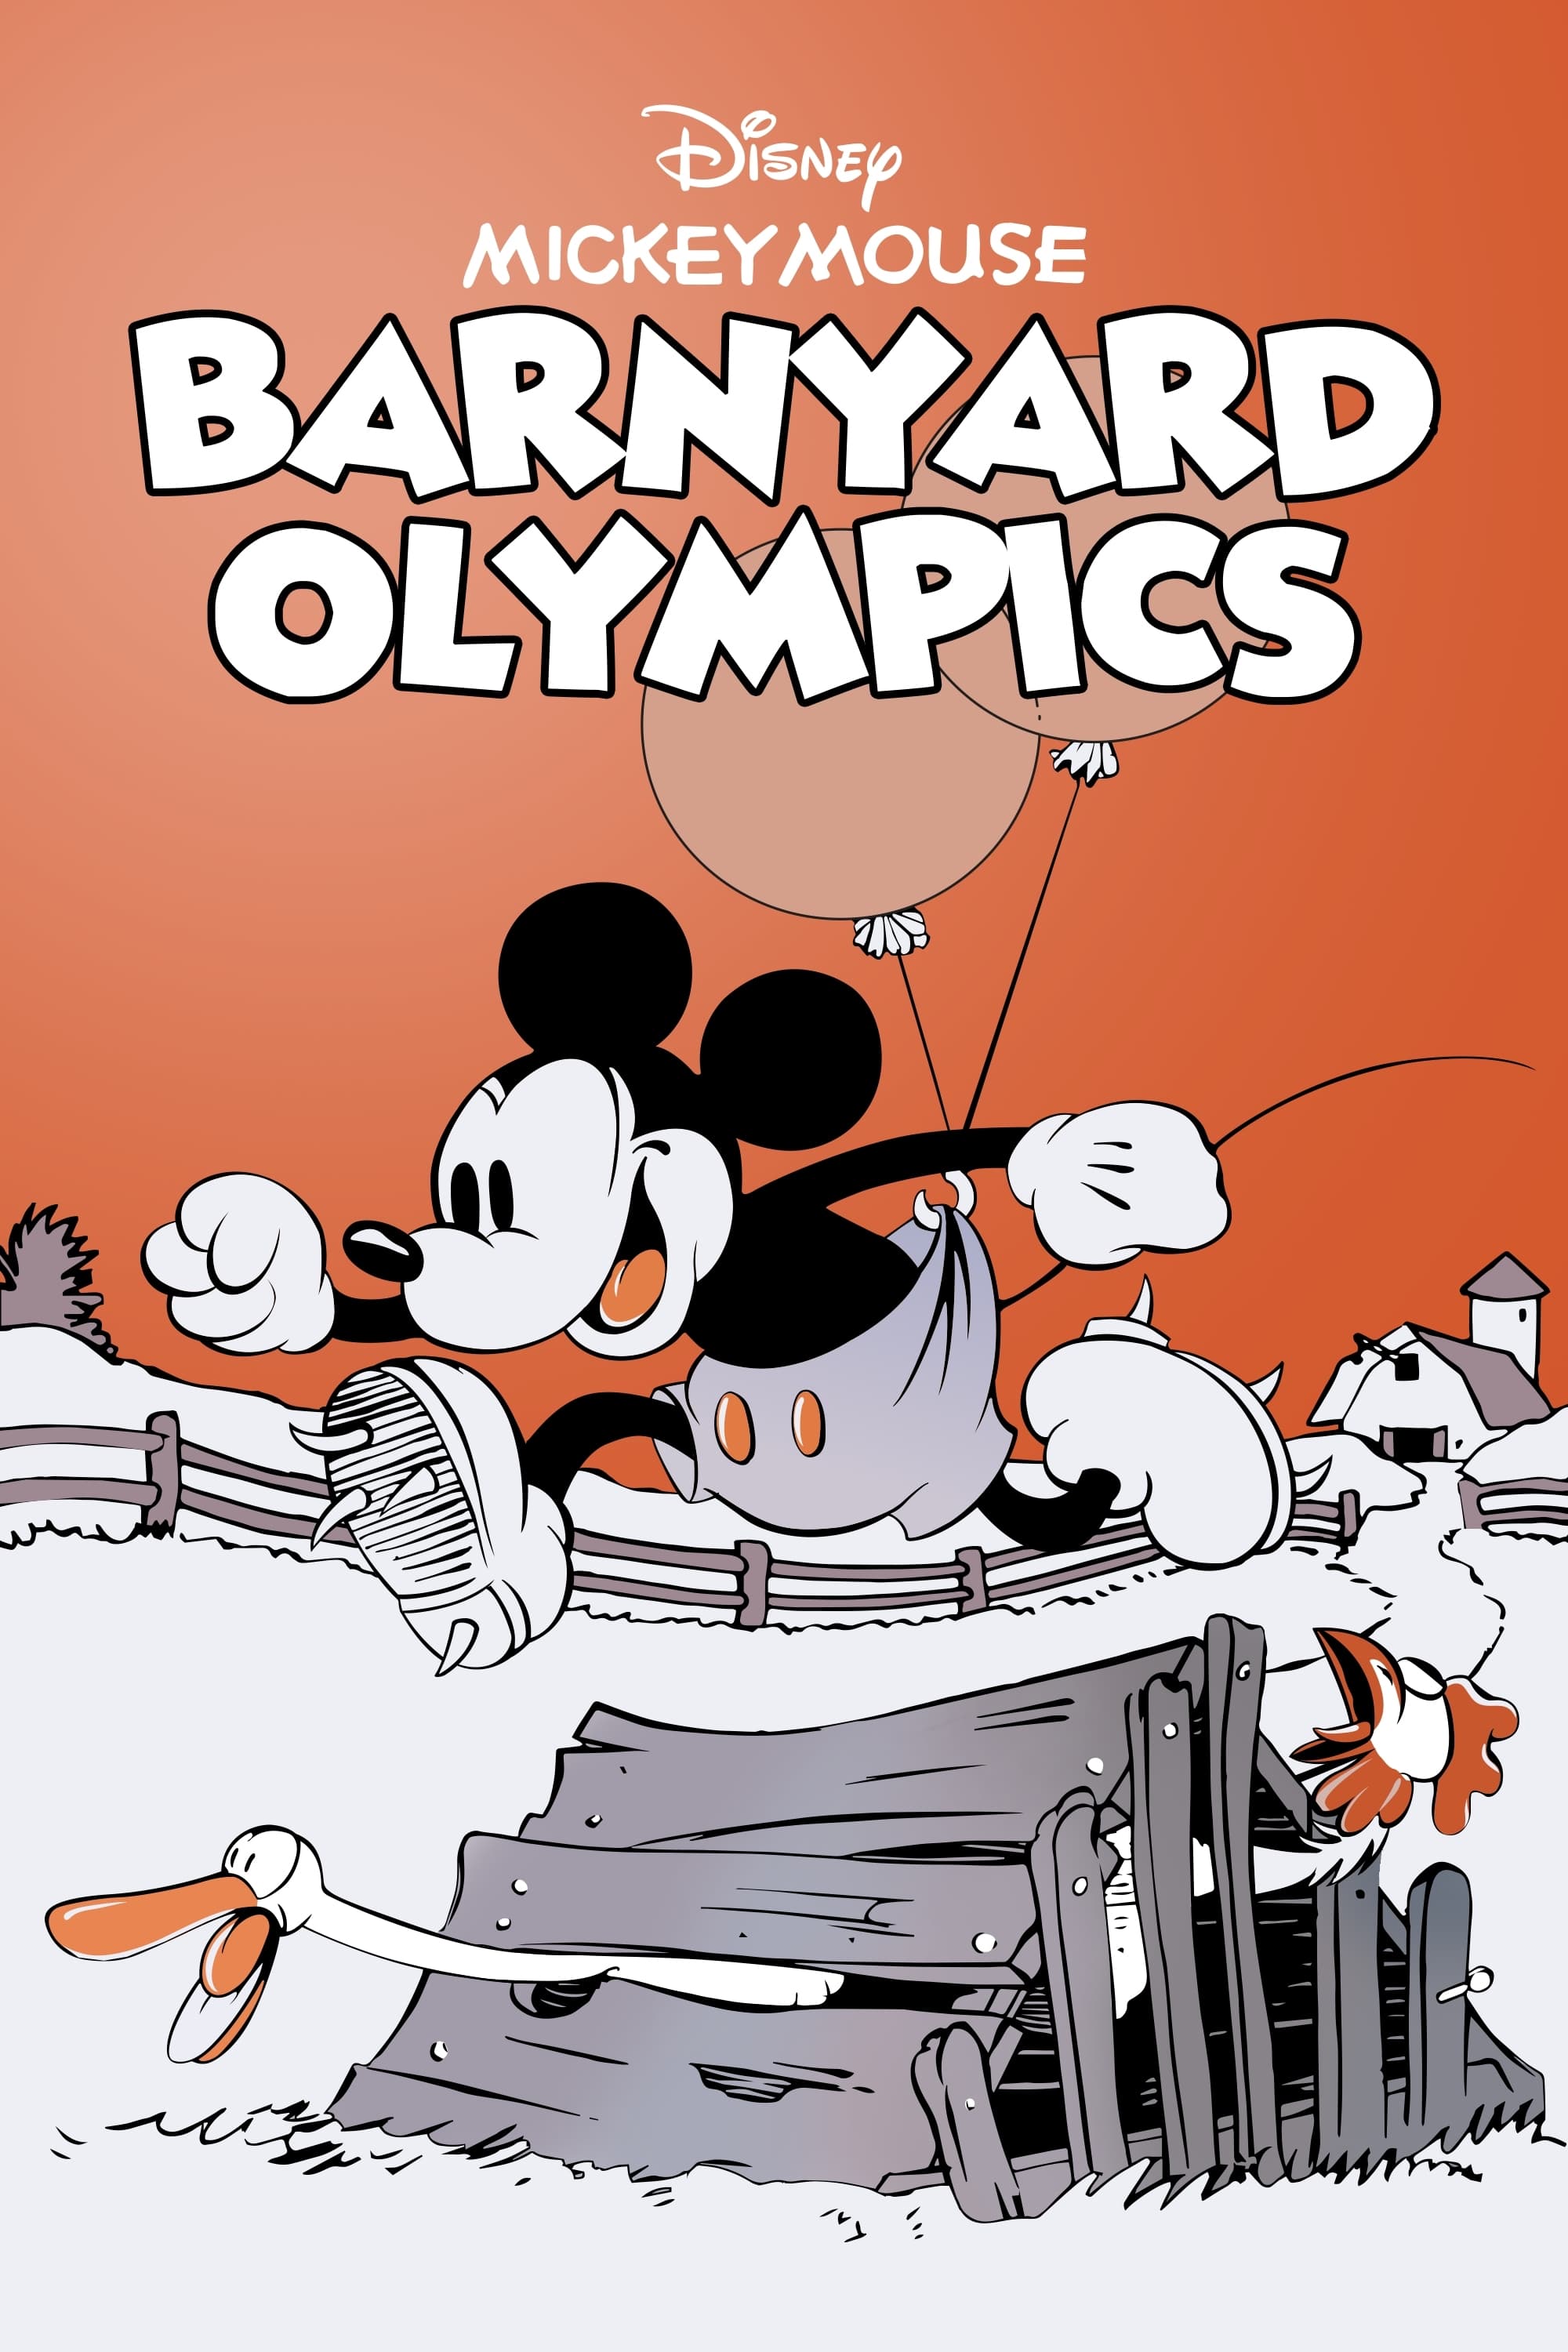 Barnyard Olympics (1932)